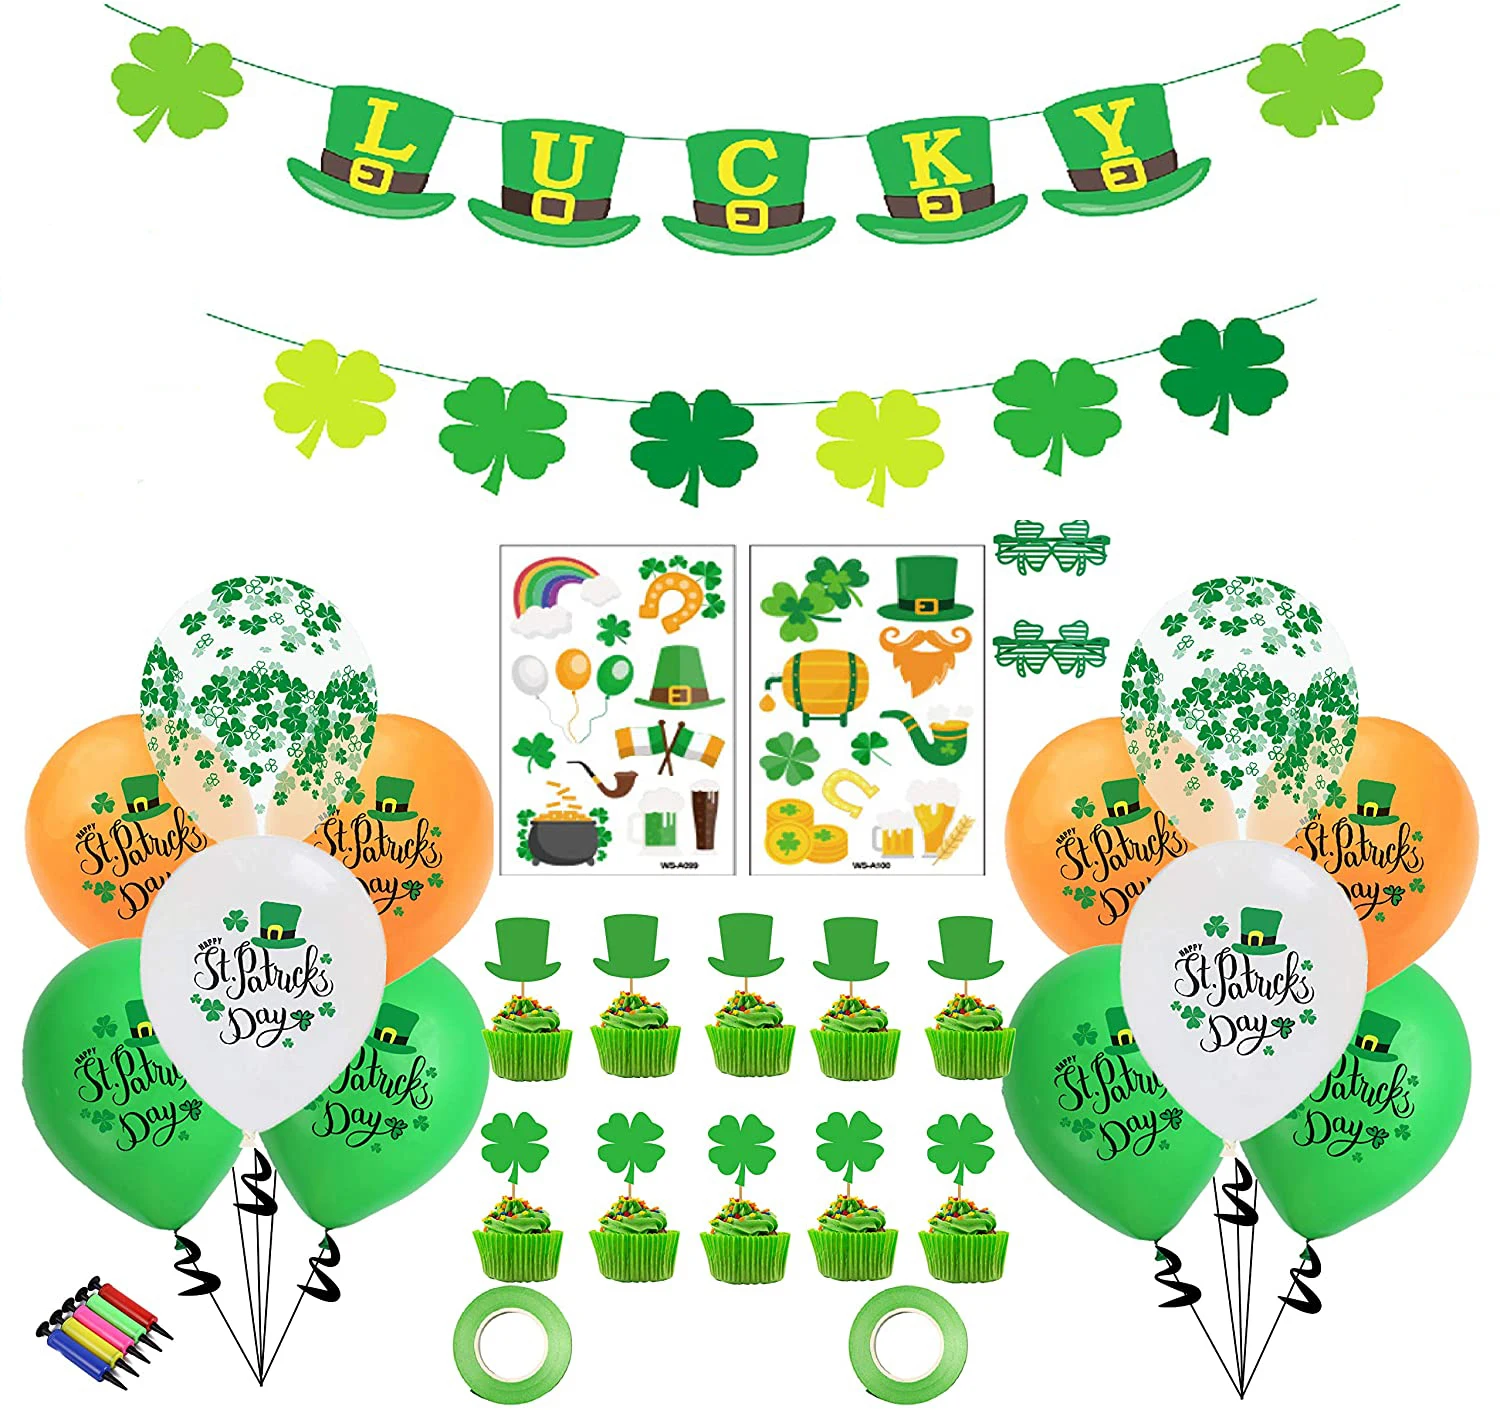 

St Patricks Day Decorations Balloon Green Lucky Irish Party Sets Saint Patty Shamrock Hanging Swirls Clover Banners Cake Flag